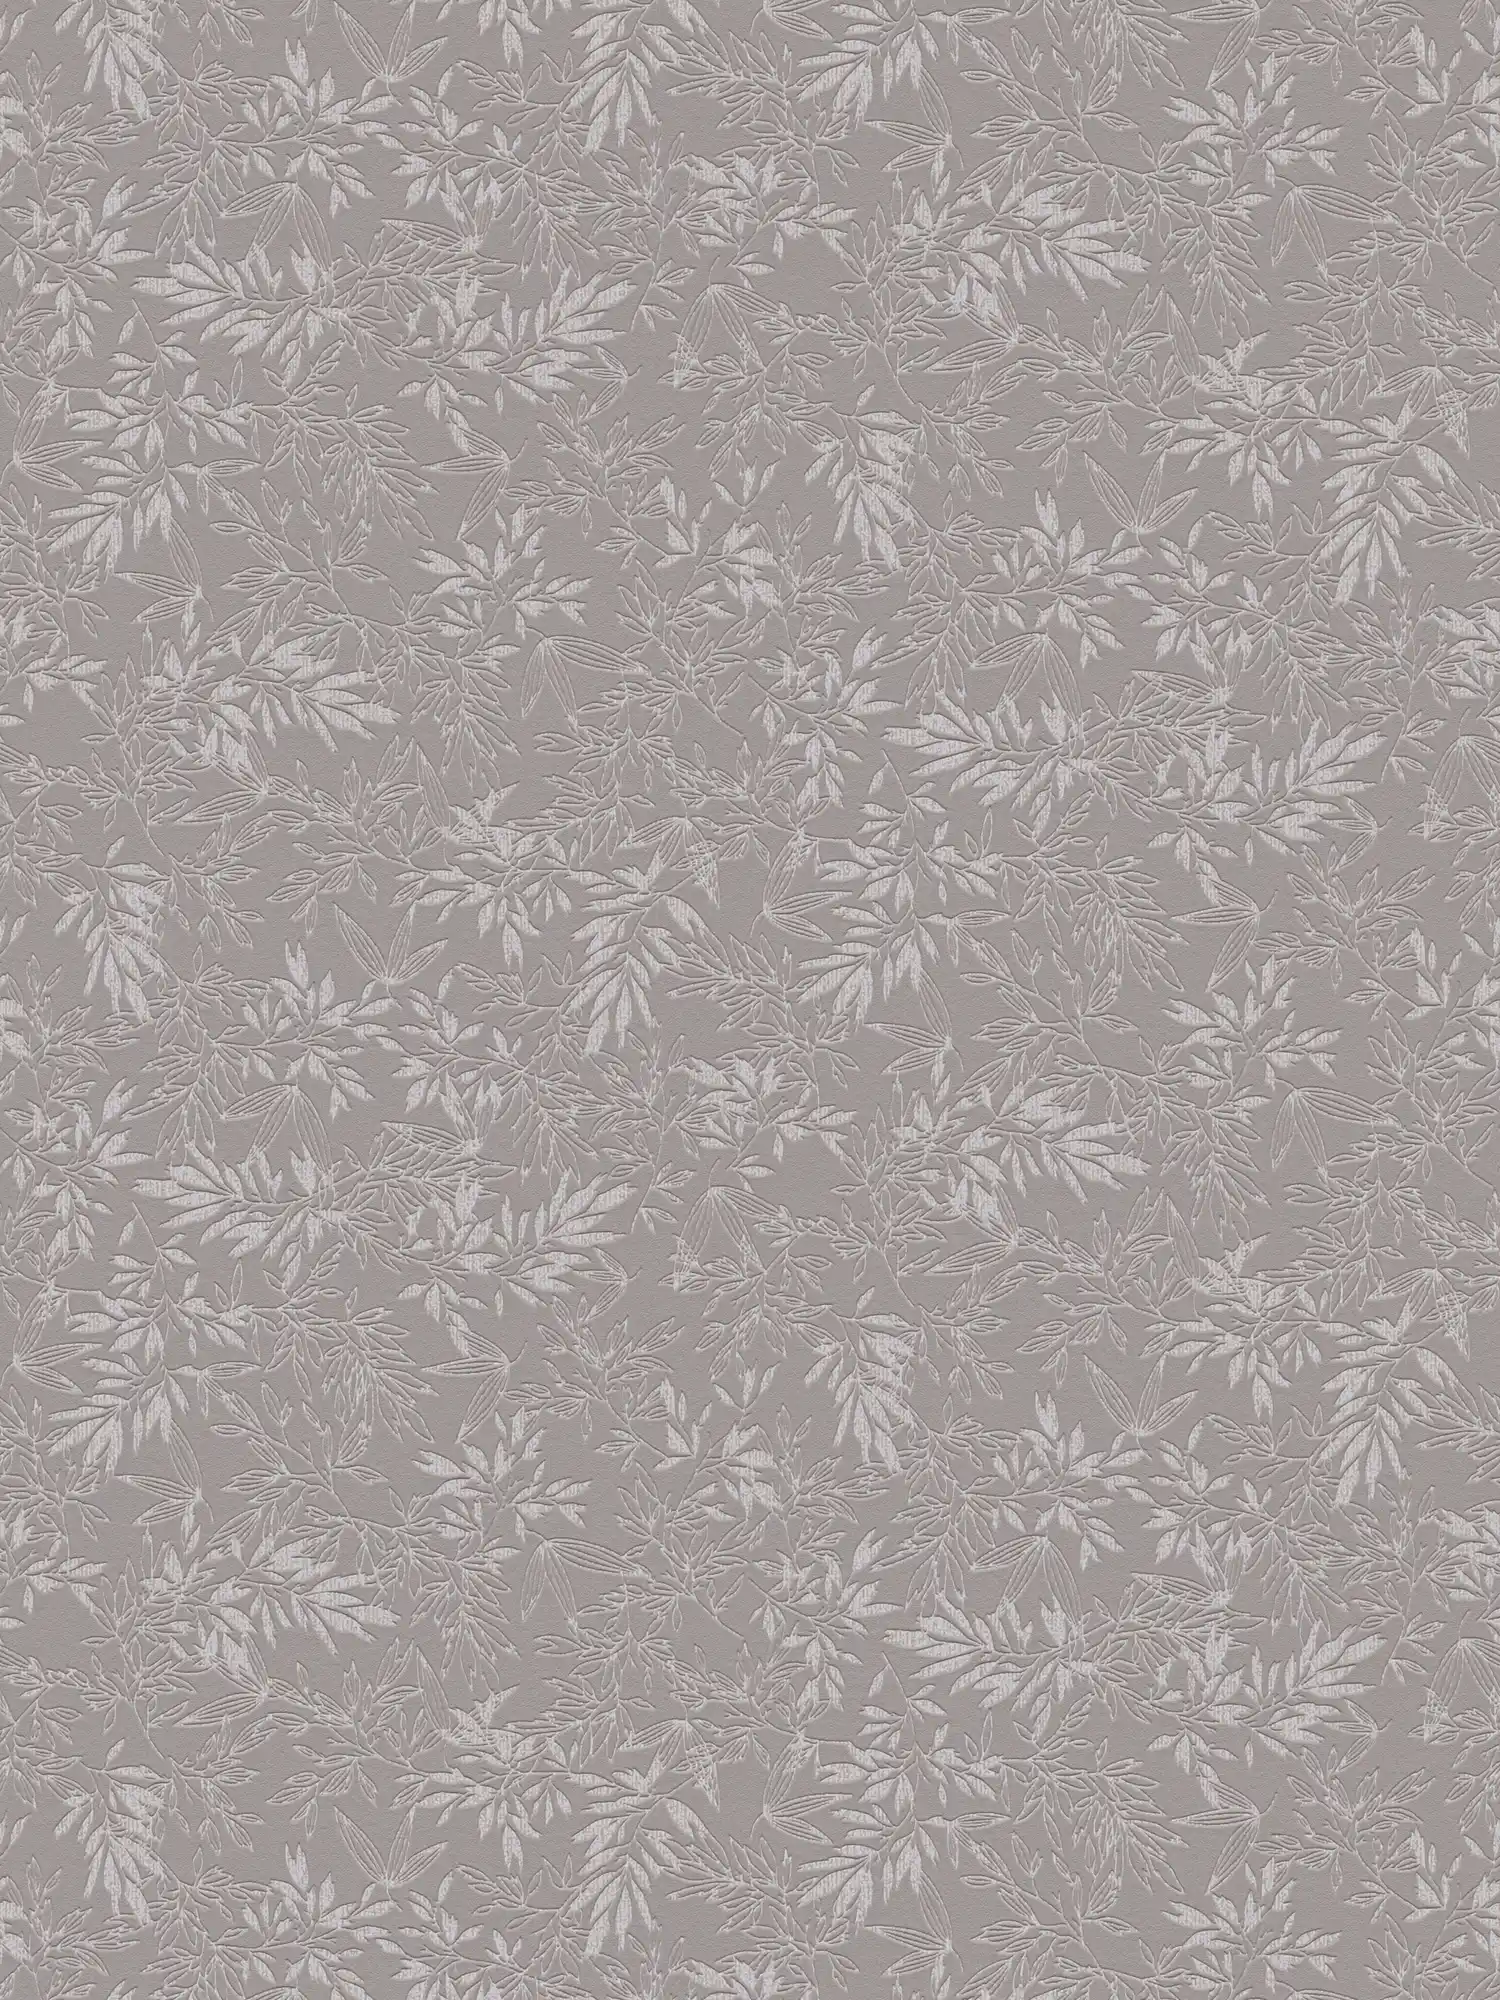 Leaves wallpaper with foam structure in matt - grey, light grey
